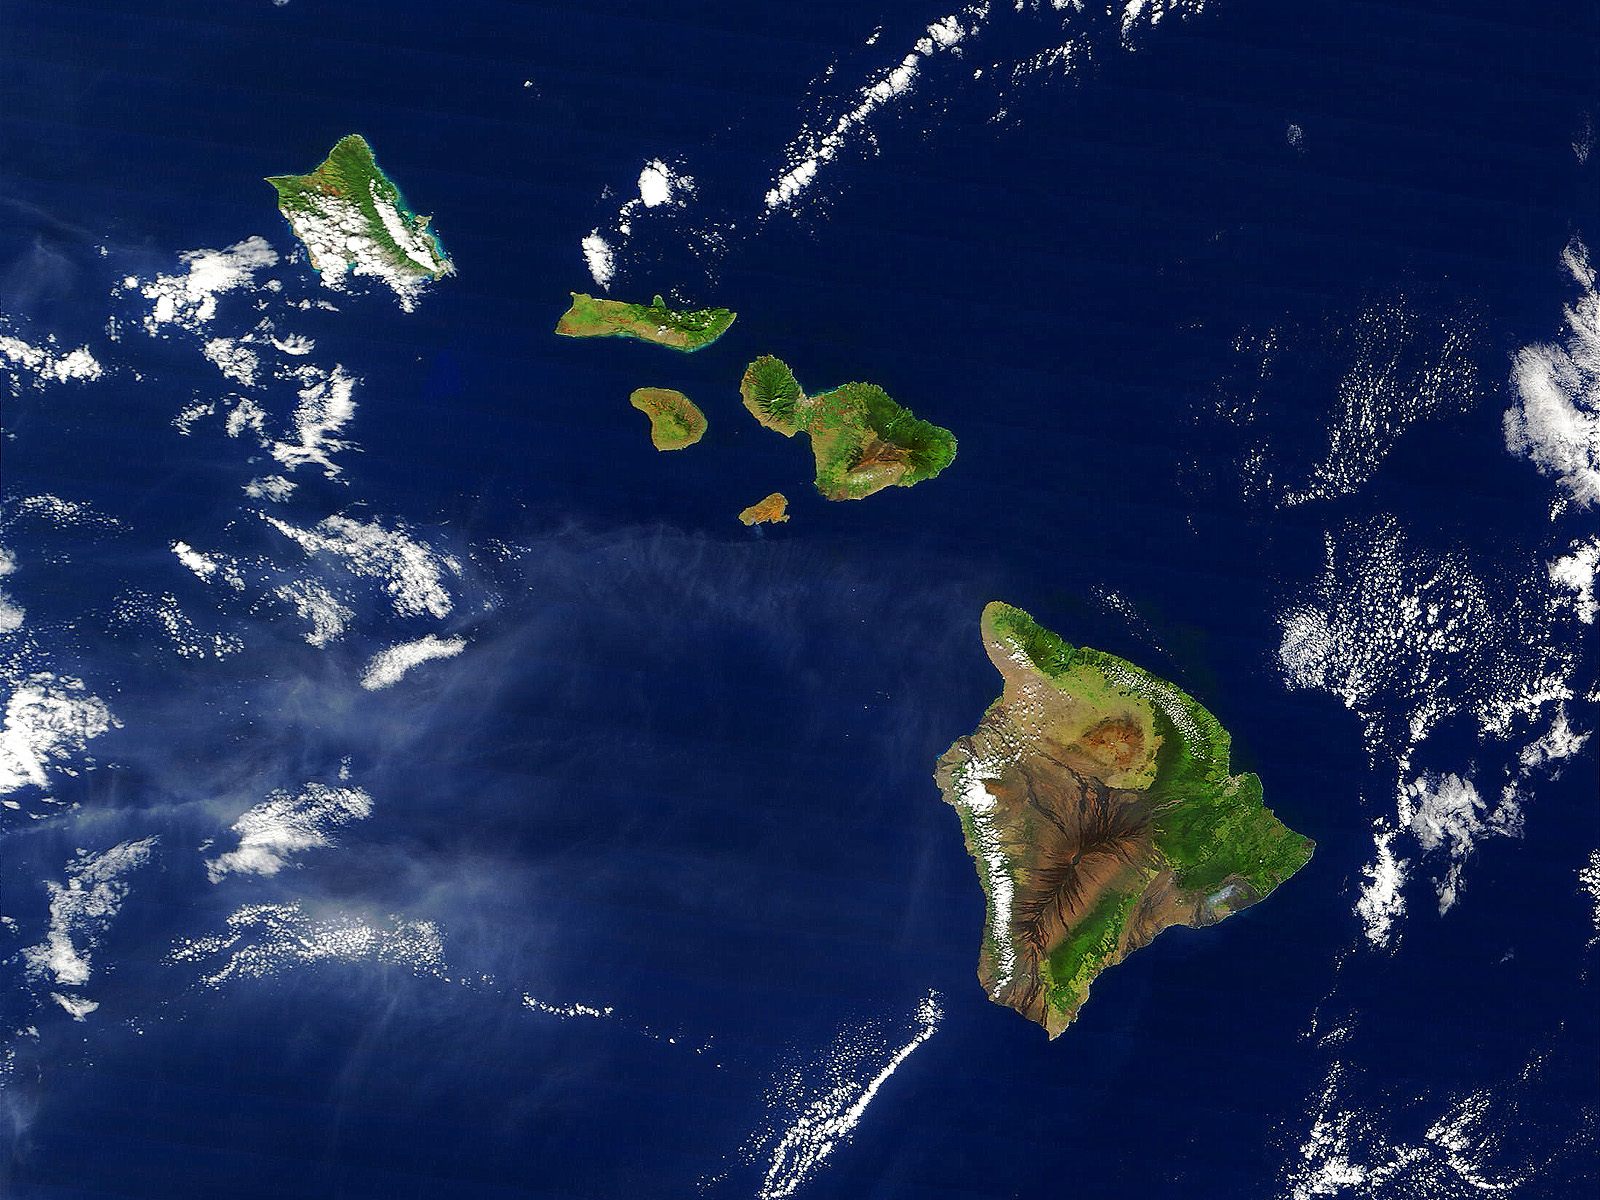 Hawaii images Satellite Image of the Hawaiian Islands wallpaper photos